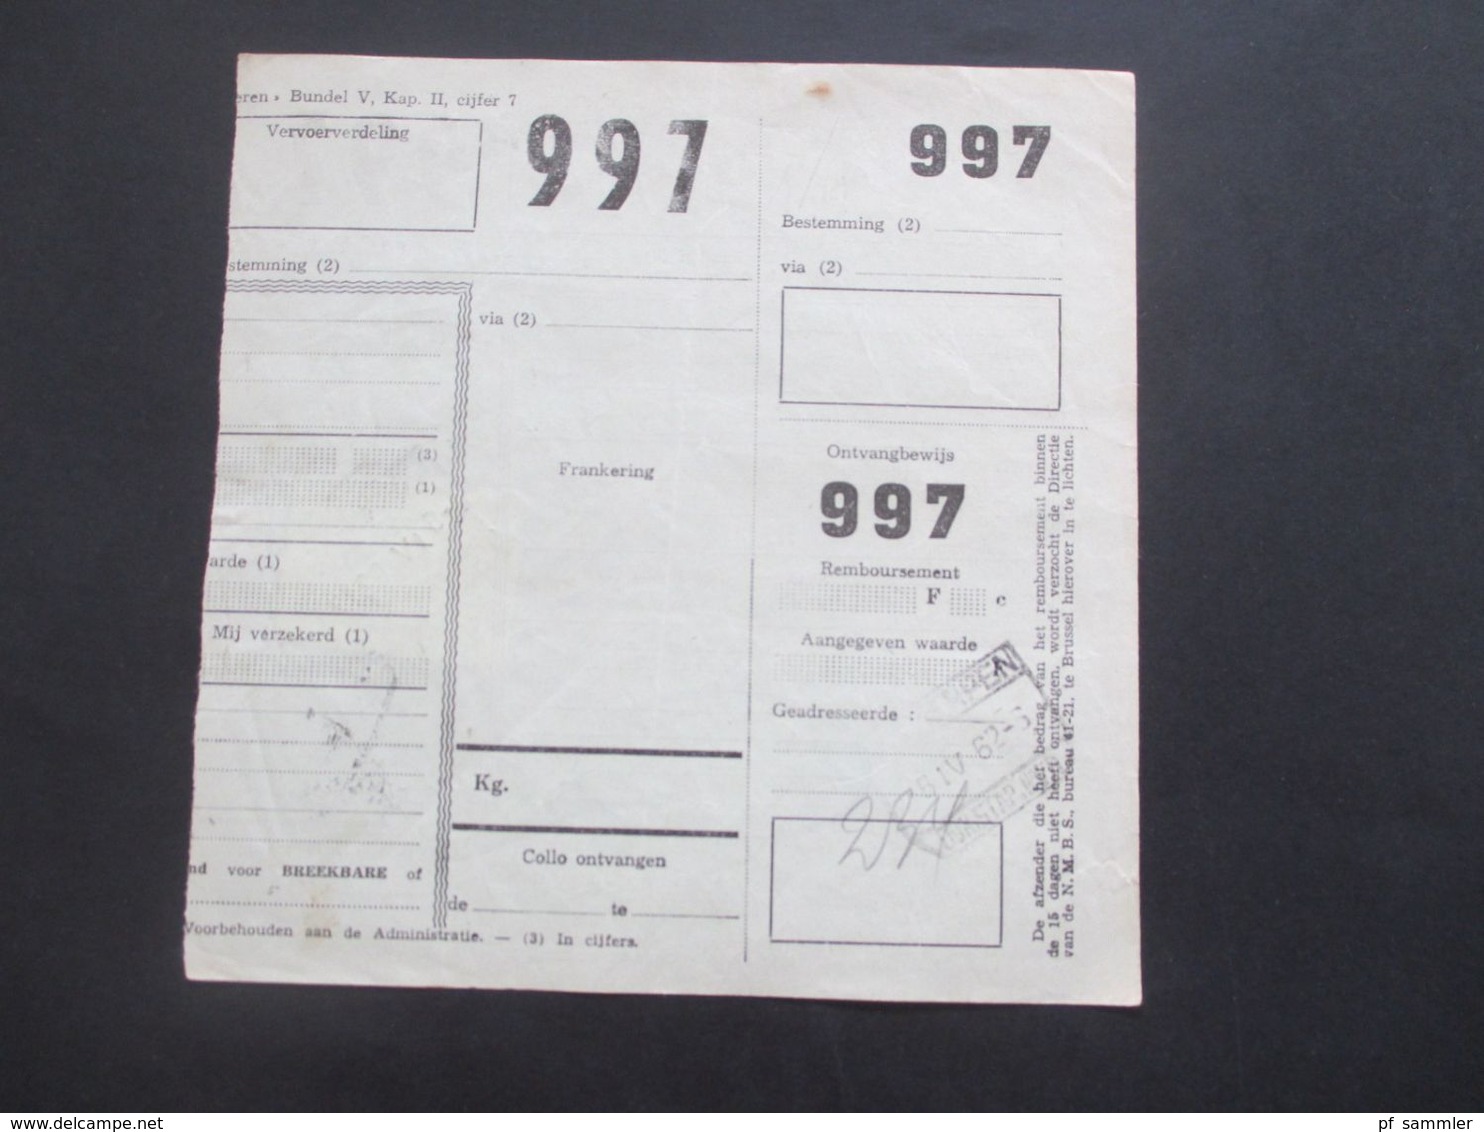 Belgien 1962 / 63 Bahnpost / Paketkarten 26 Stk. verschiedene Stempel / Stöberposten